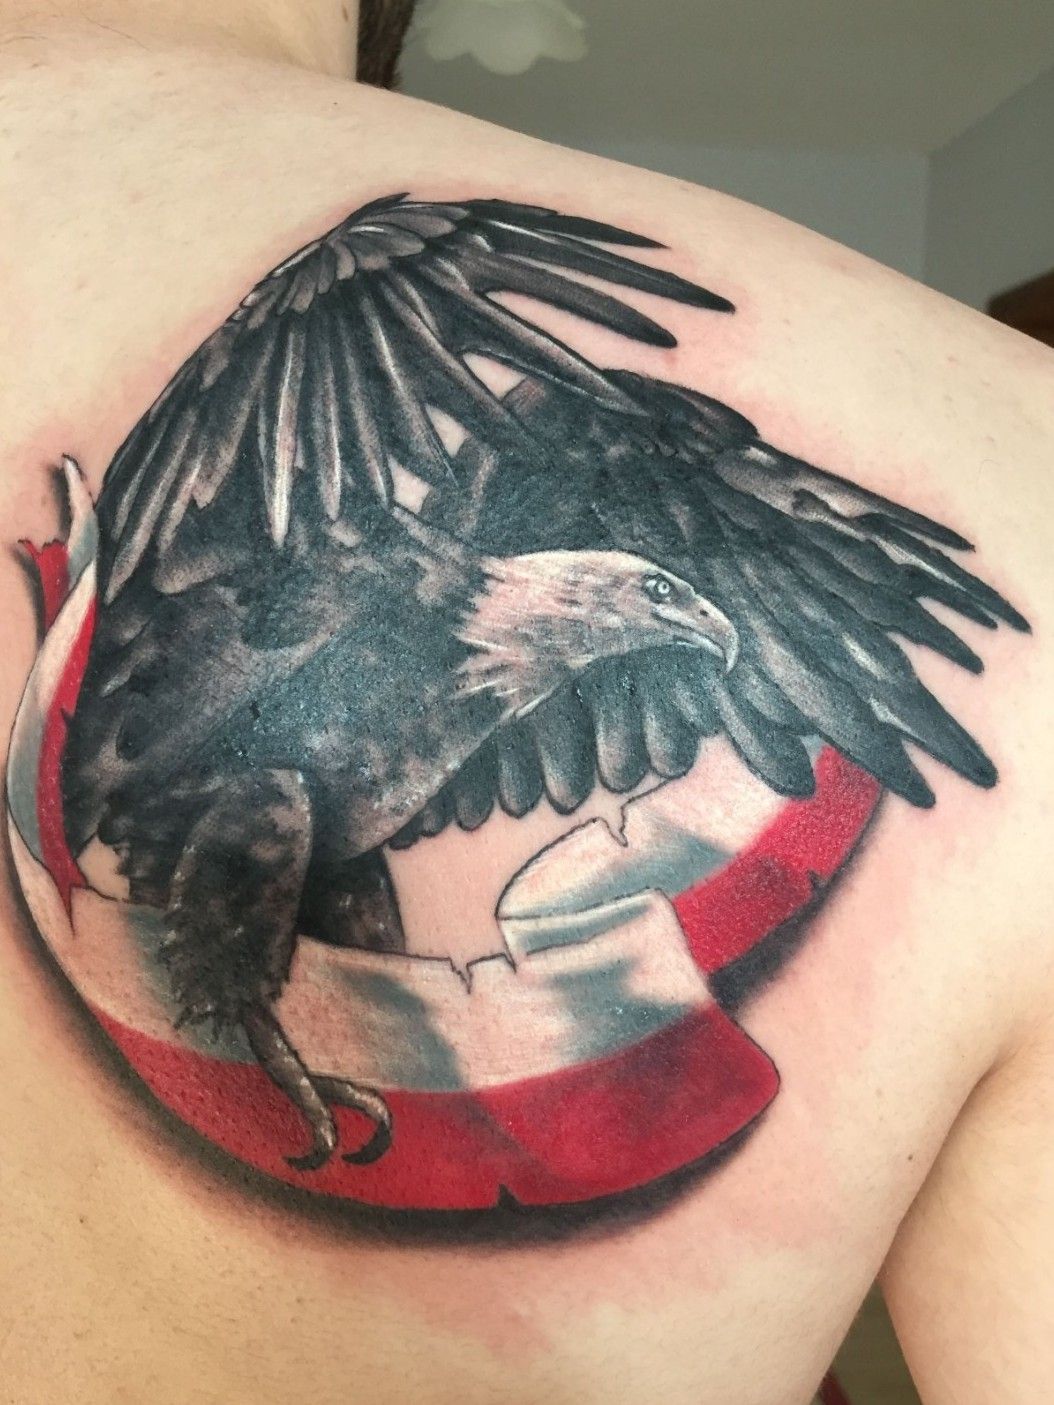 60 Polish Eagle Tattoo Designs For Men  Coat Of Arms Ink  Polish tattoos  Polish eagle tattoo Tattoo designs men